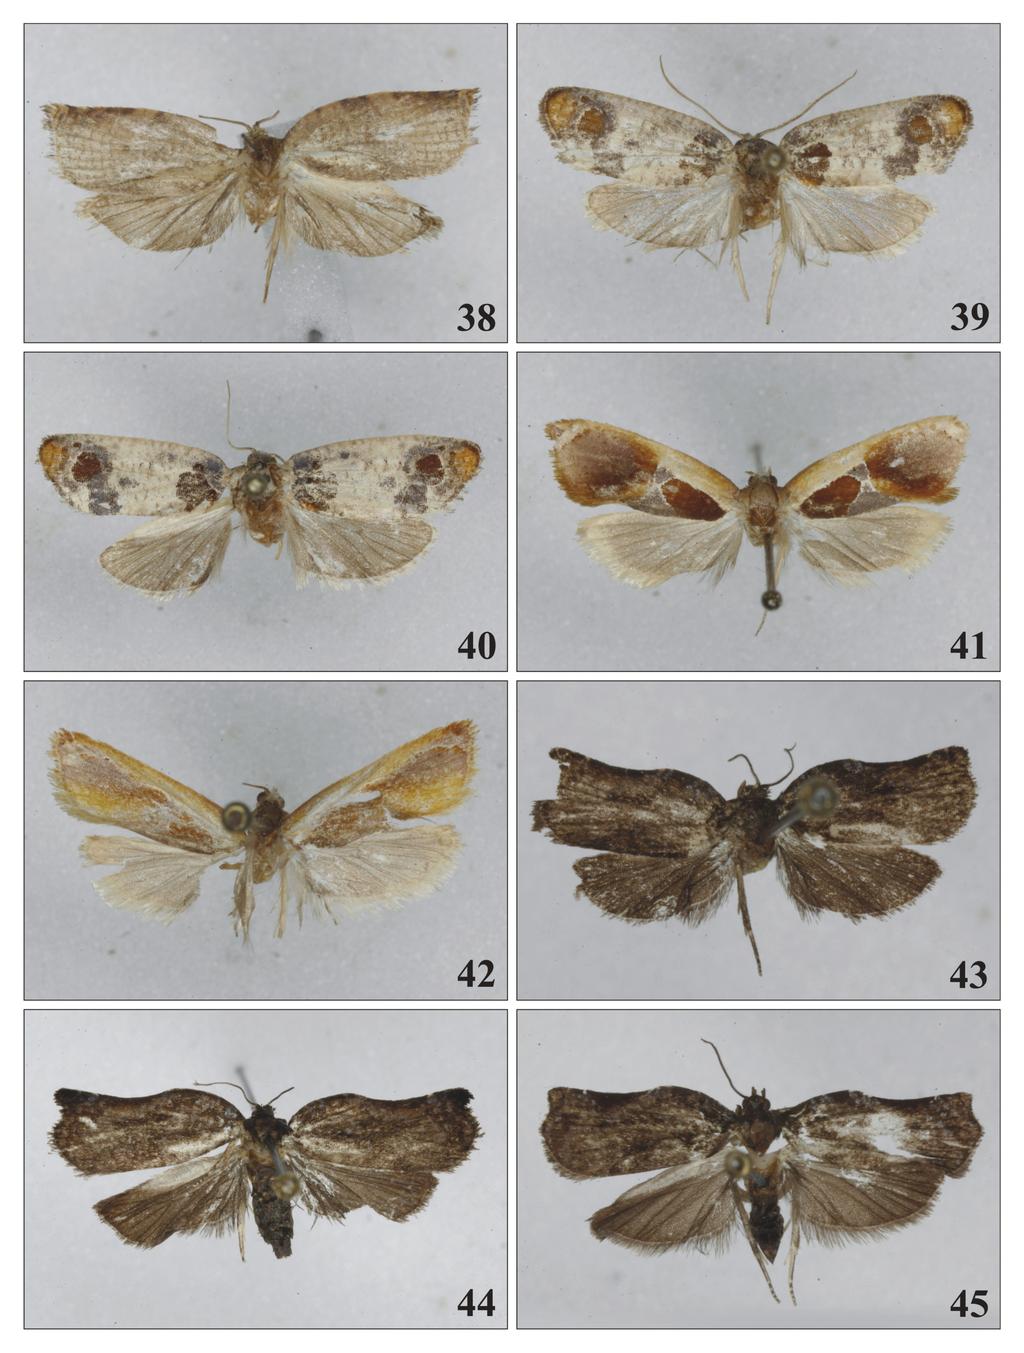 RAZOWSKI J.: Tortricidae (Lepidoptera) from Vietnam 231 Figs 38-45. Adults: 38 G. brunneochroa sp. n., holotype, 39 Terthreutis furcata sp. n., holotype; 40 T. furcata sp. n., paratype female; 41 Synochoneura sapana sp.